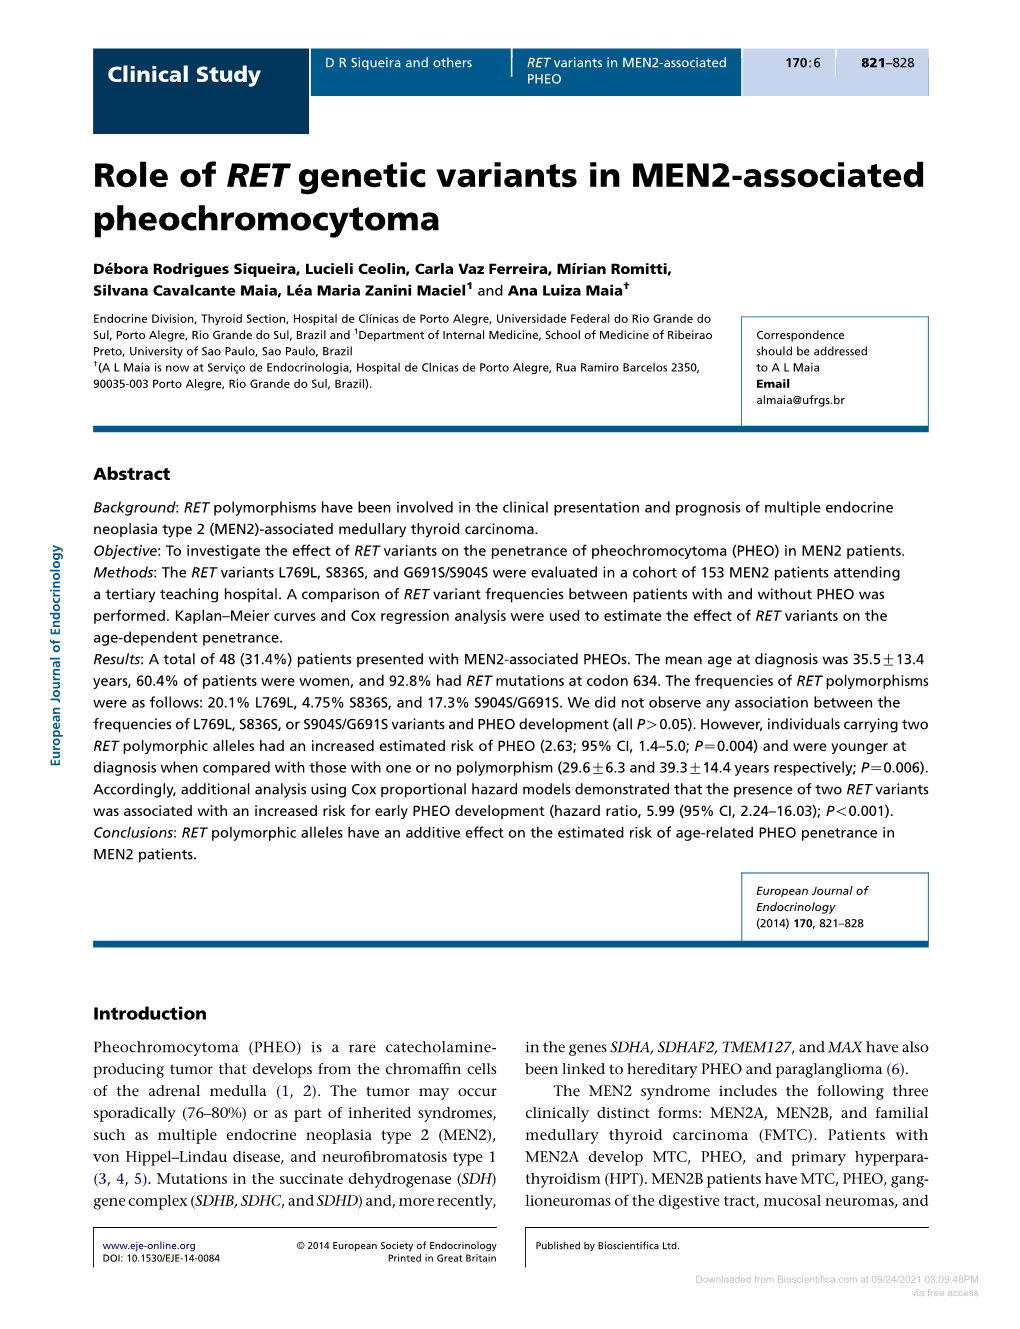 Role of RET Genetic Variants in MEN2-Associated Pheochromocytoma